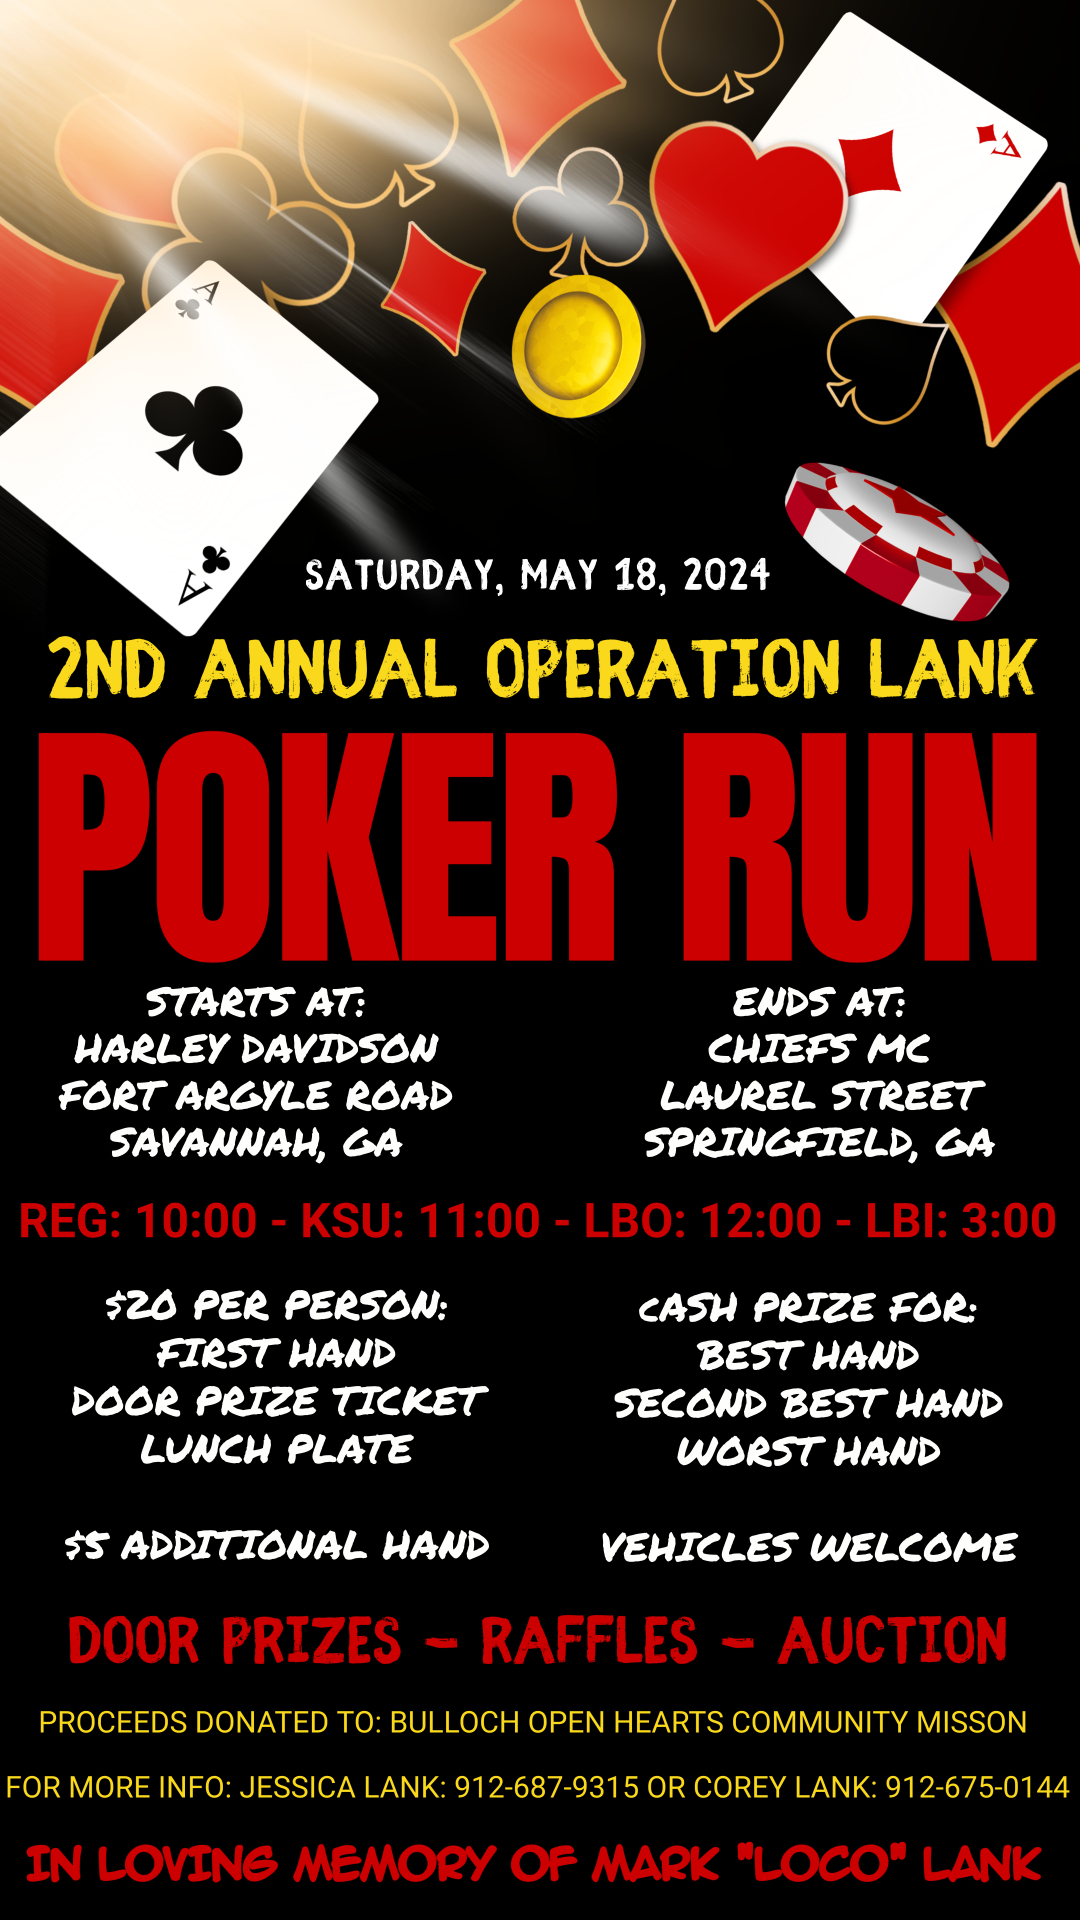 Chiefs MC - 2nd Annual Operation Lank Poker Run @ Savannah Harley-Davidson | Savannah | Georgia | United States